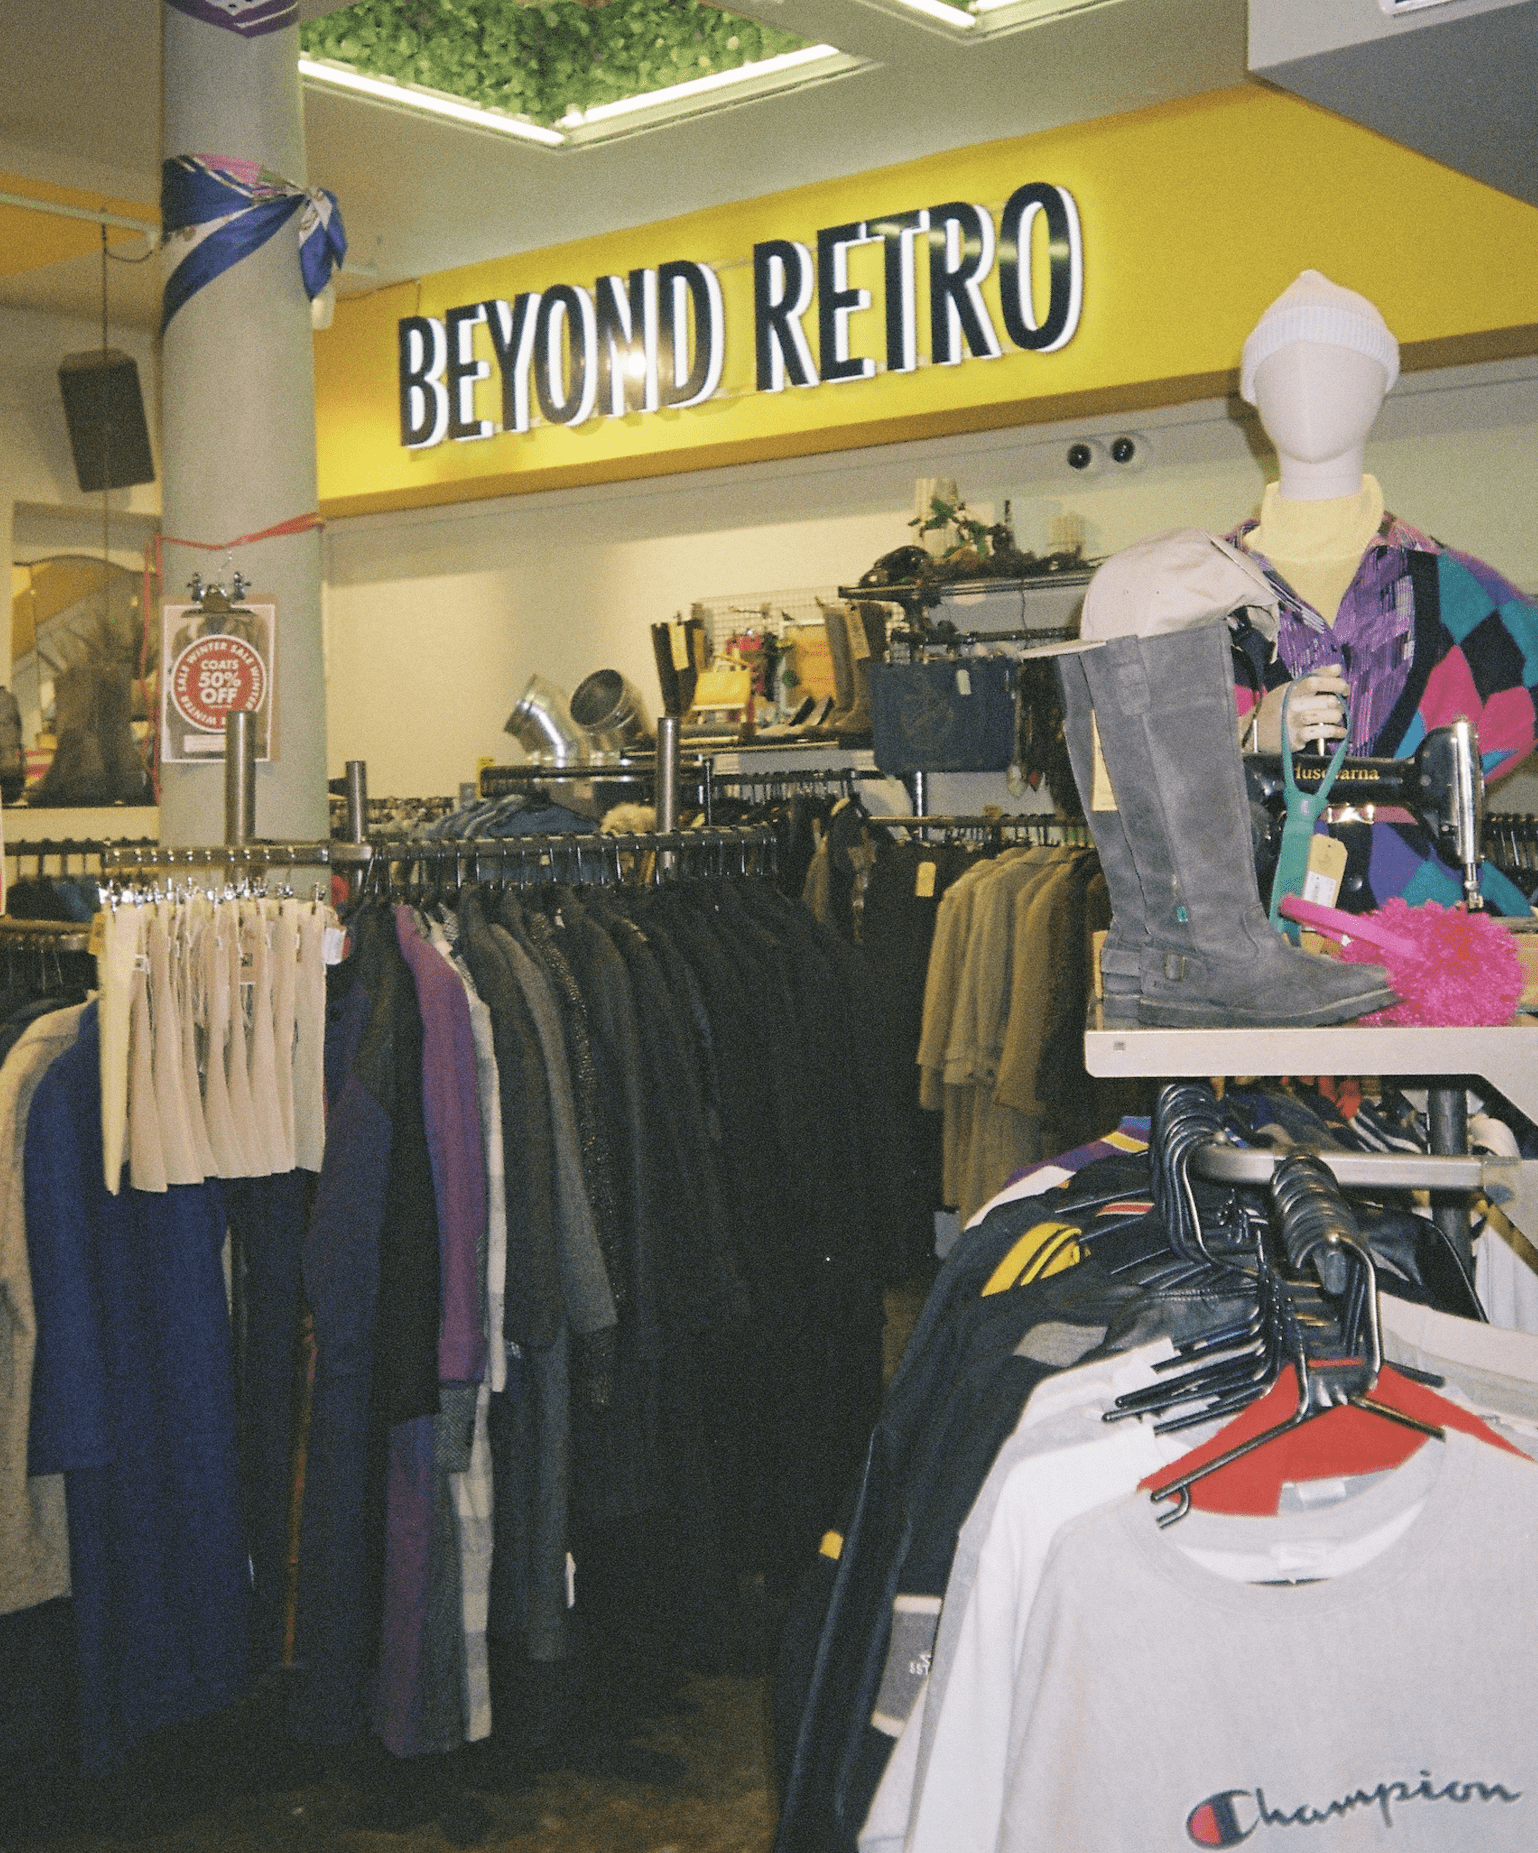 Beyond Retro to wholesale vintage apparel